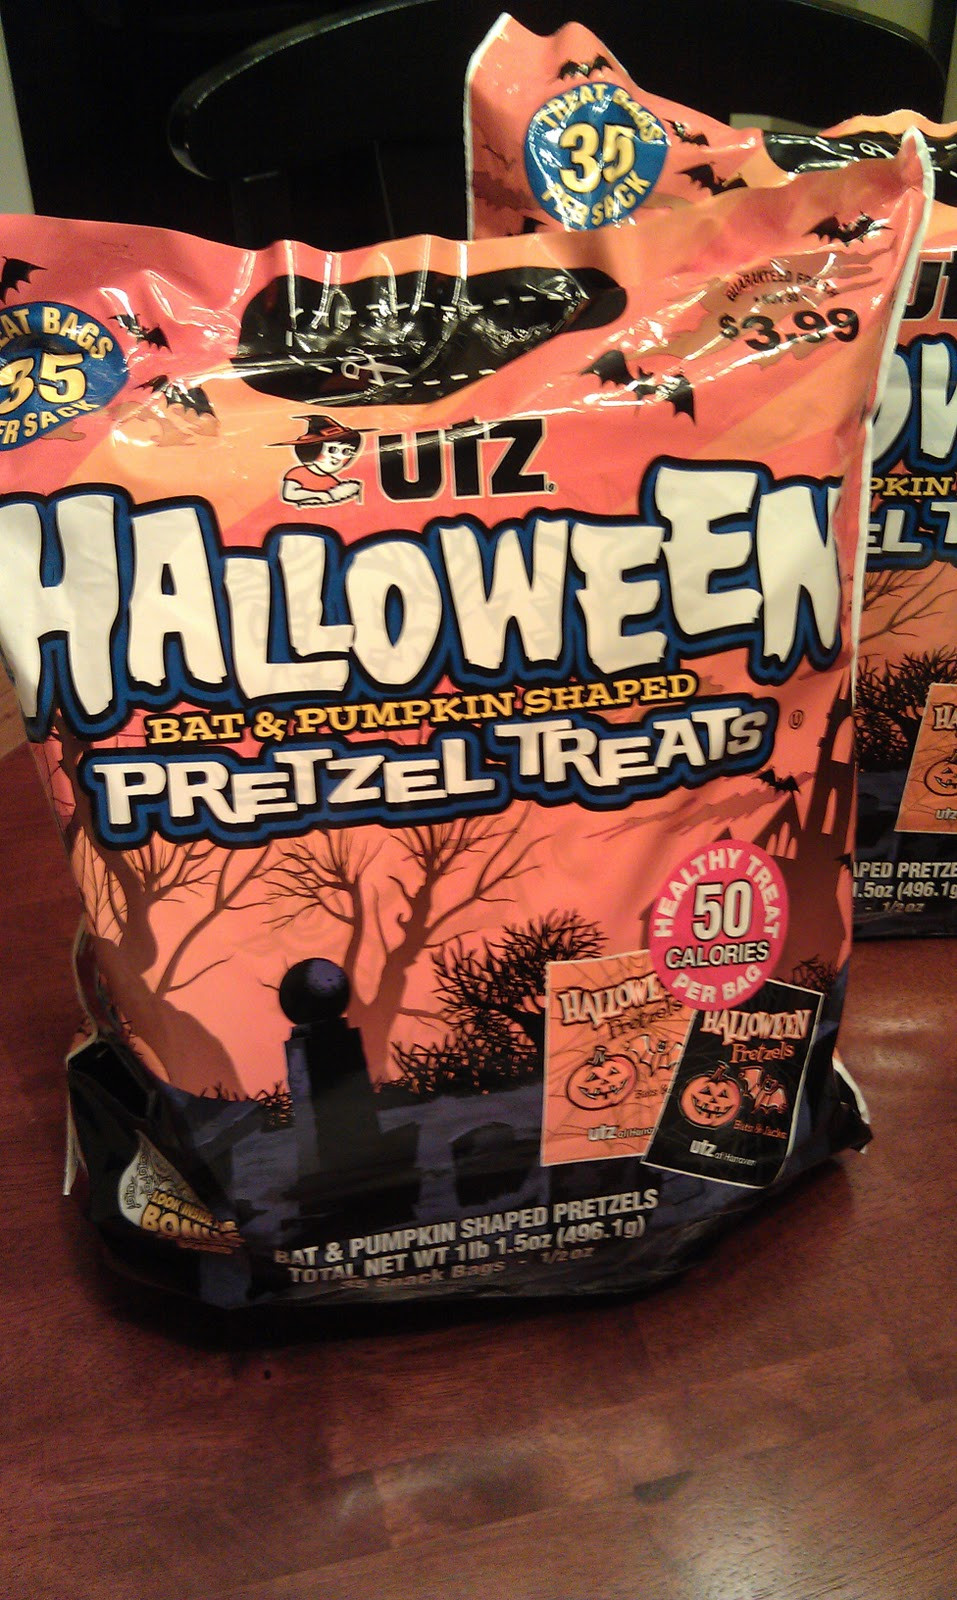 Utz Halloween Pretzels
 Peanut Allergy Free Here We e Allergy Friendly